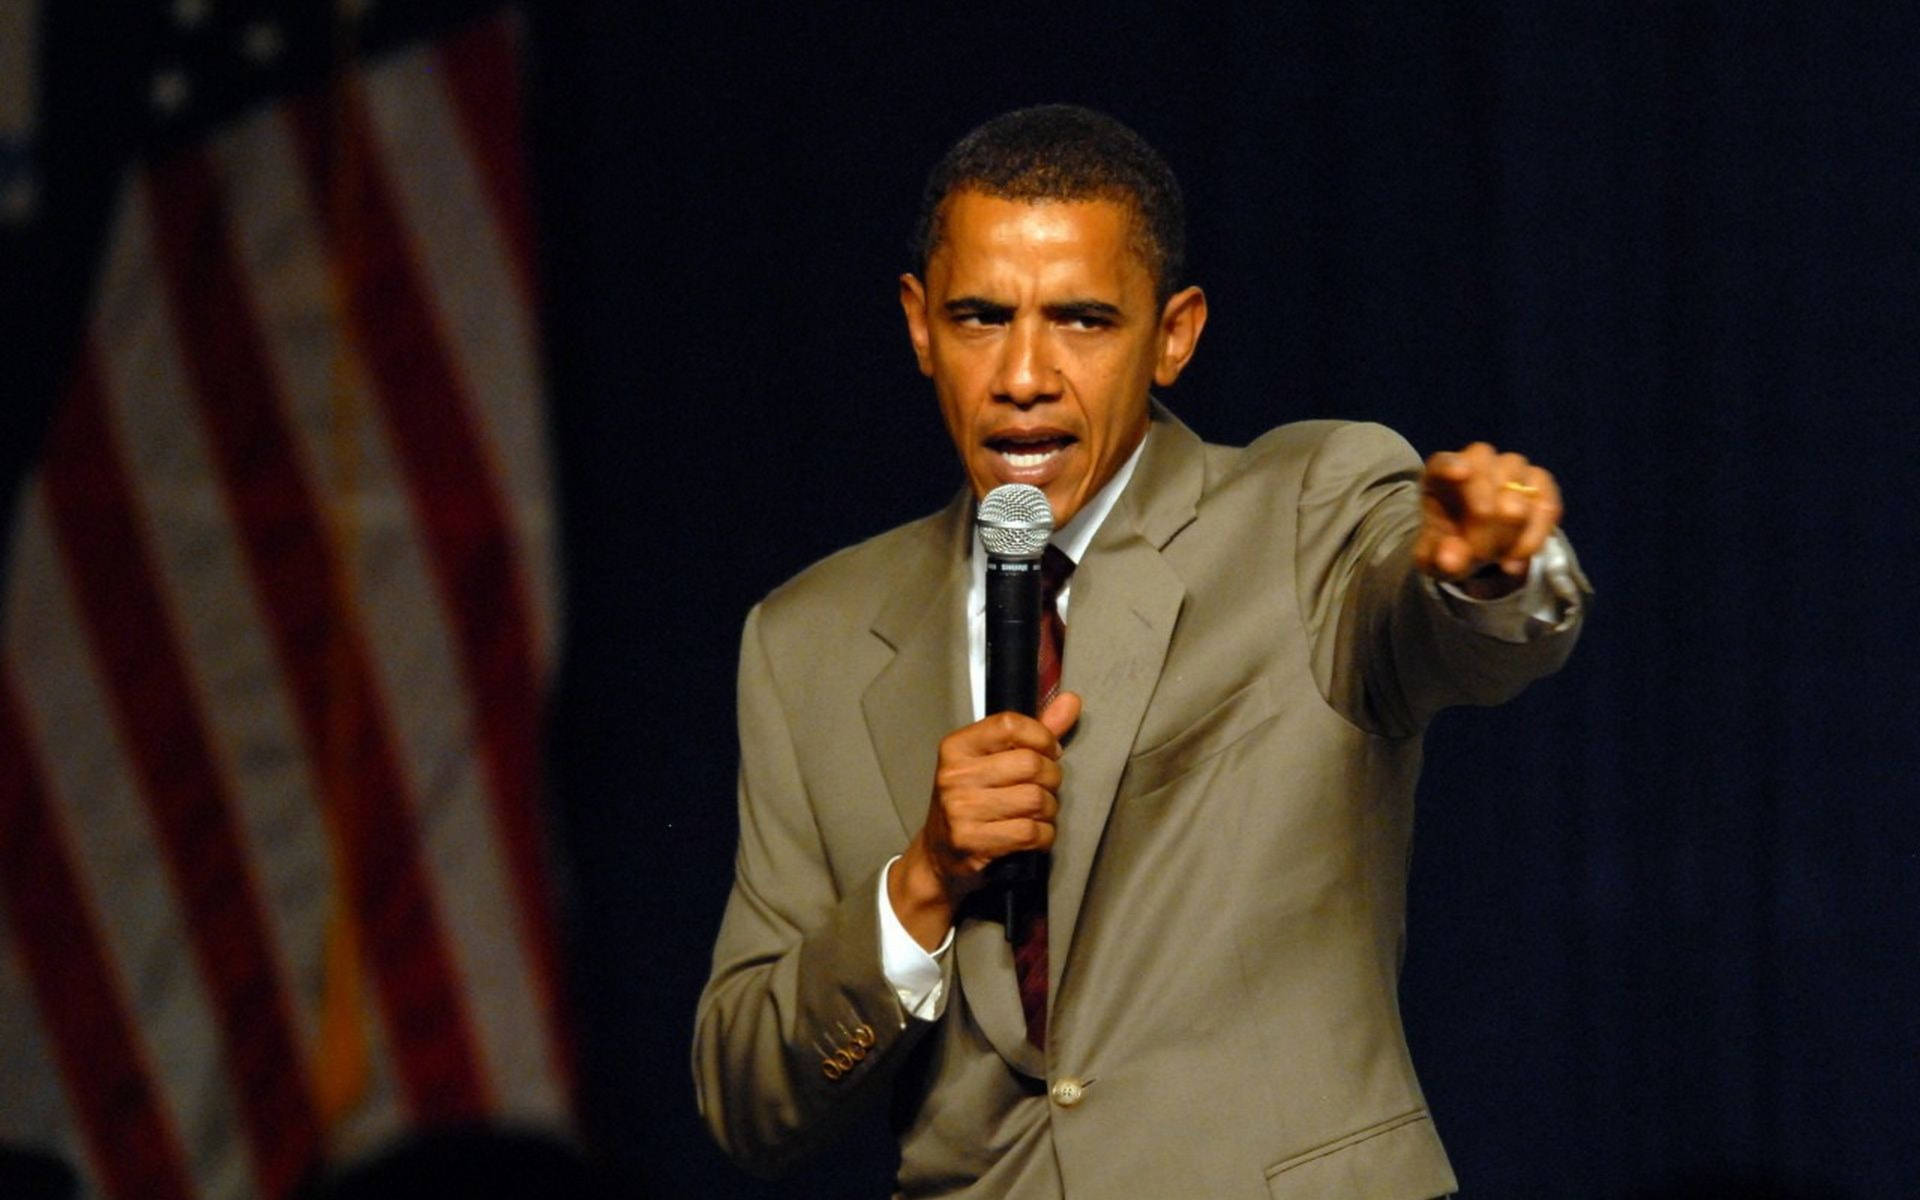 Barack Obama Making A Speech Background